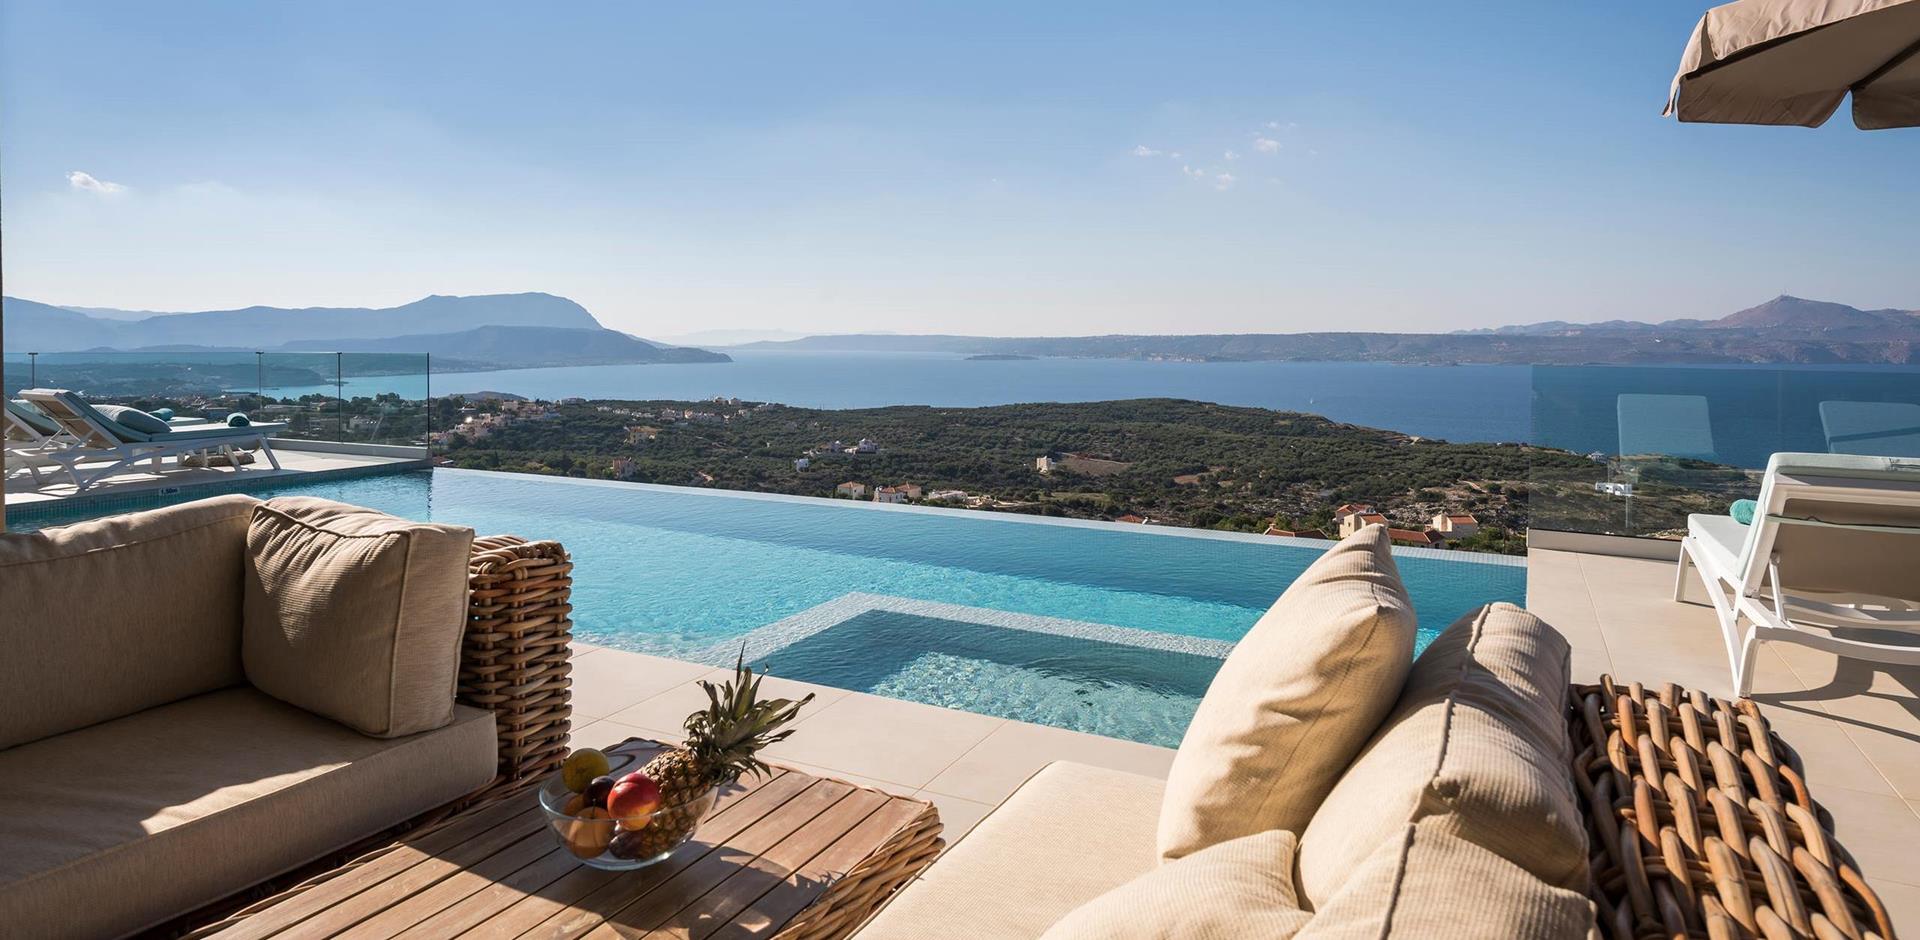 Lounge Area Overlooking The Pool, Villa Michaela, Crete